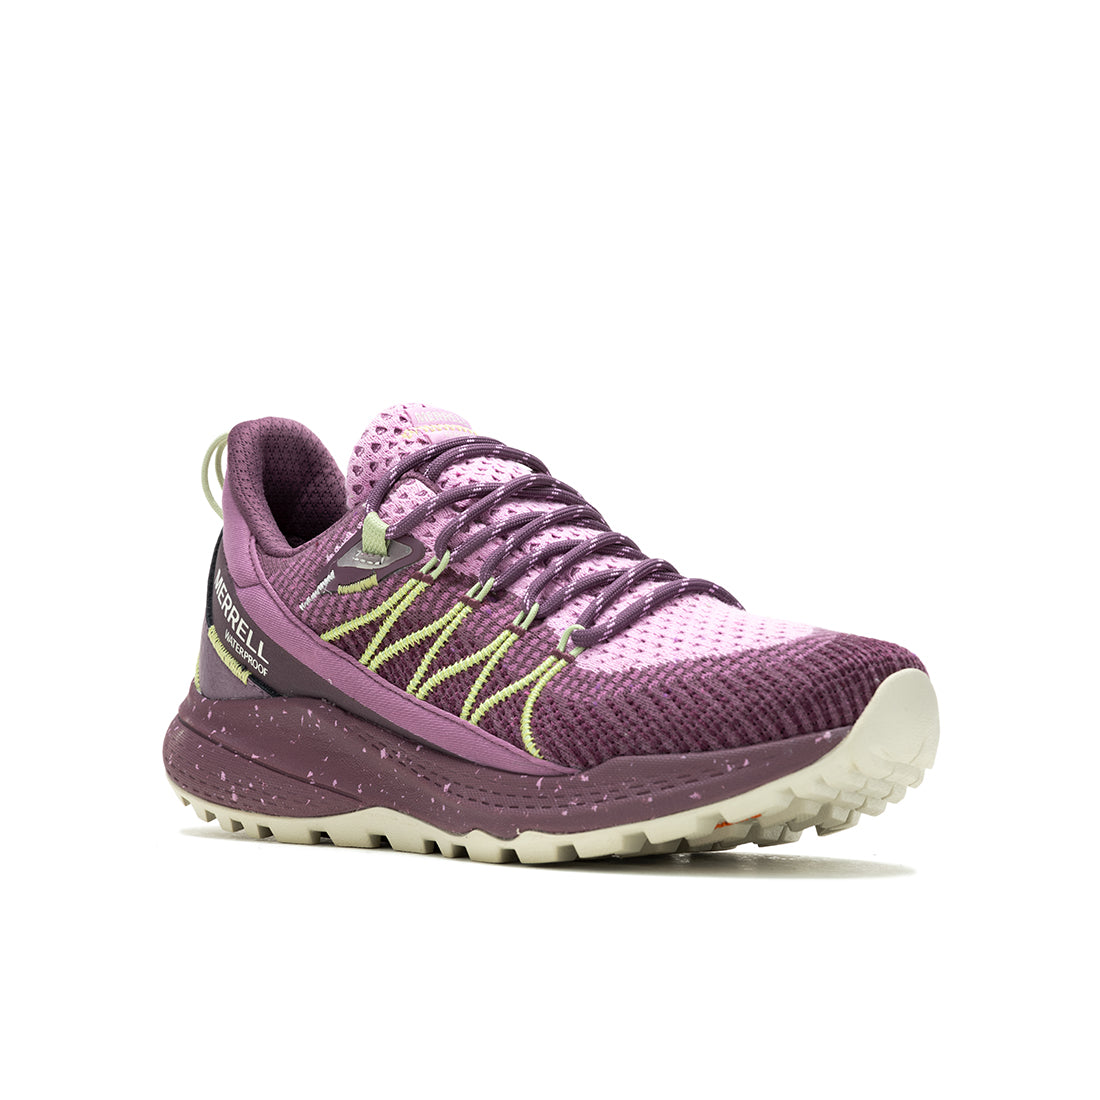 Bravada 2 Waterproof – Mauve Womens Hiking Shoes